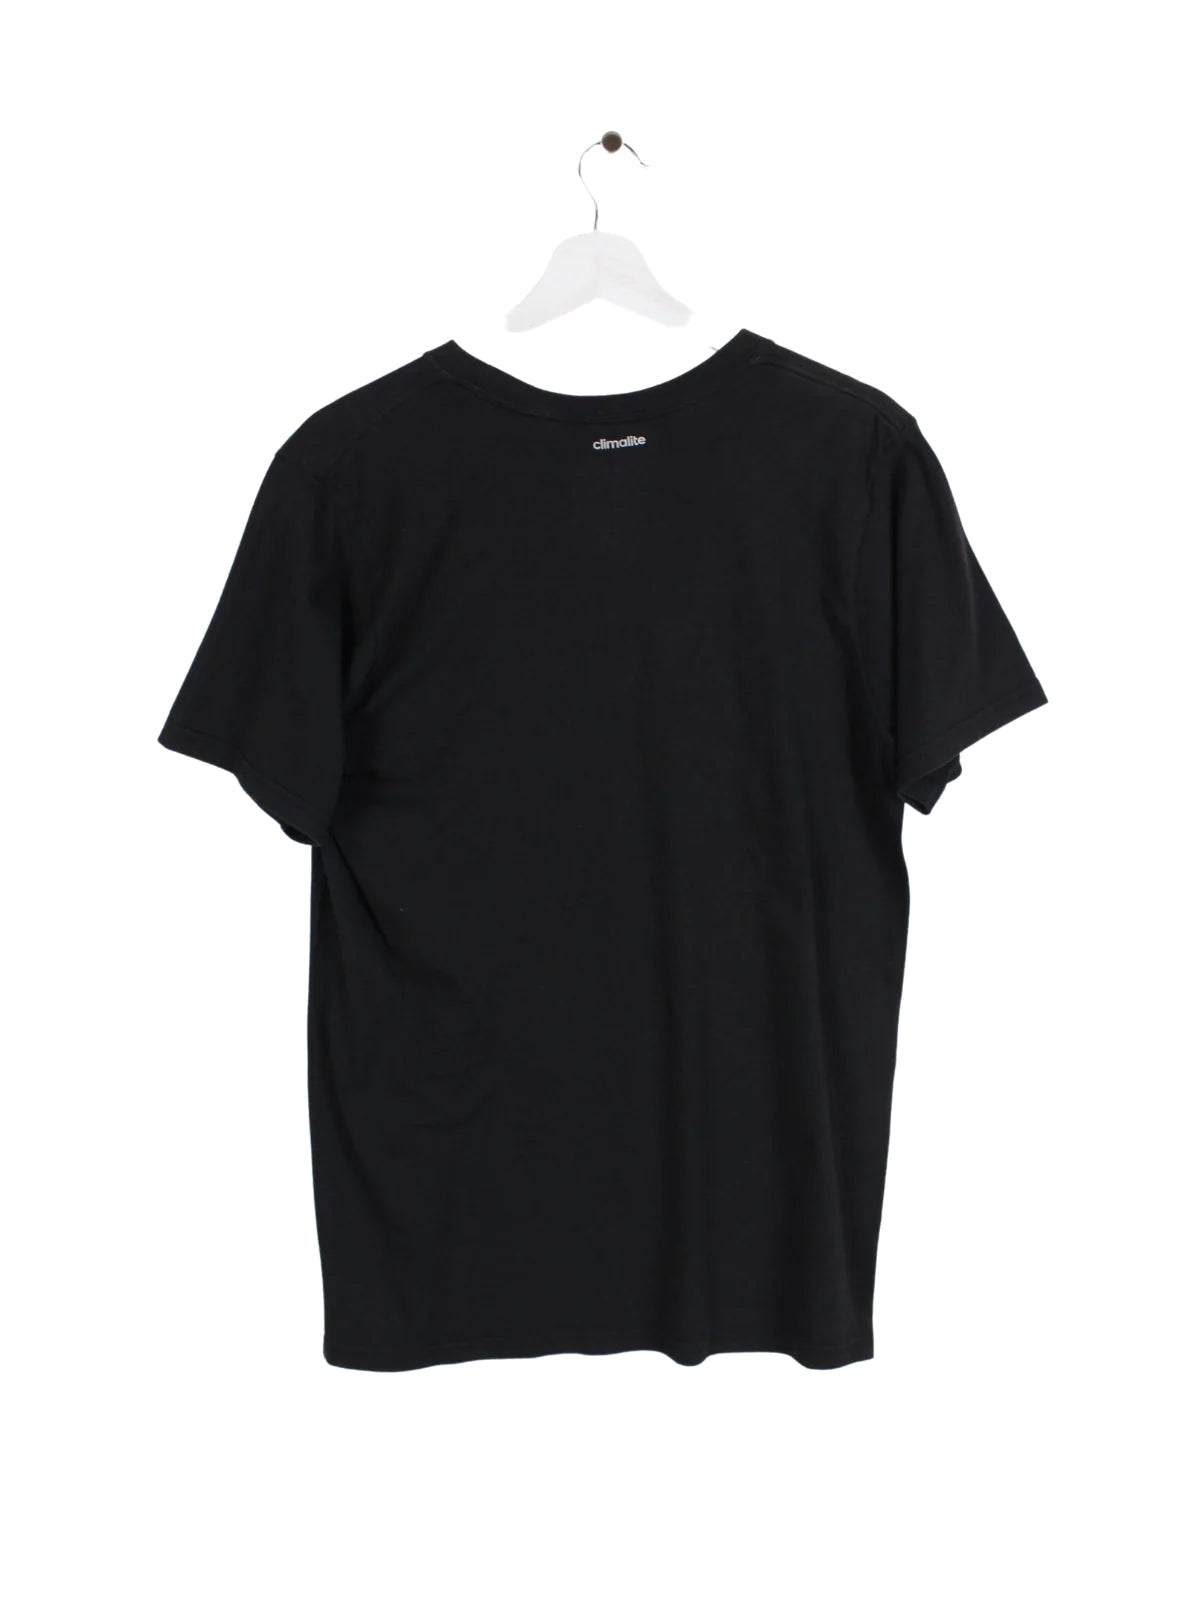 Adidas T-Shirt Schwarz M